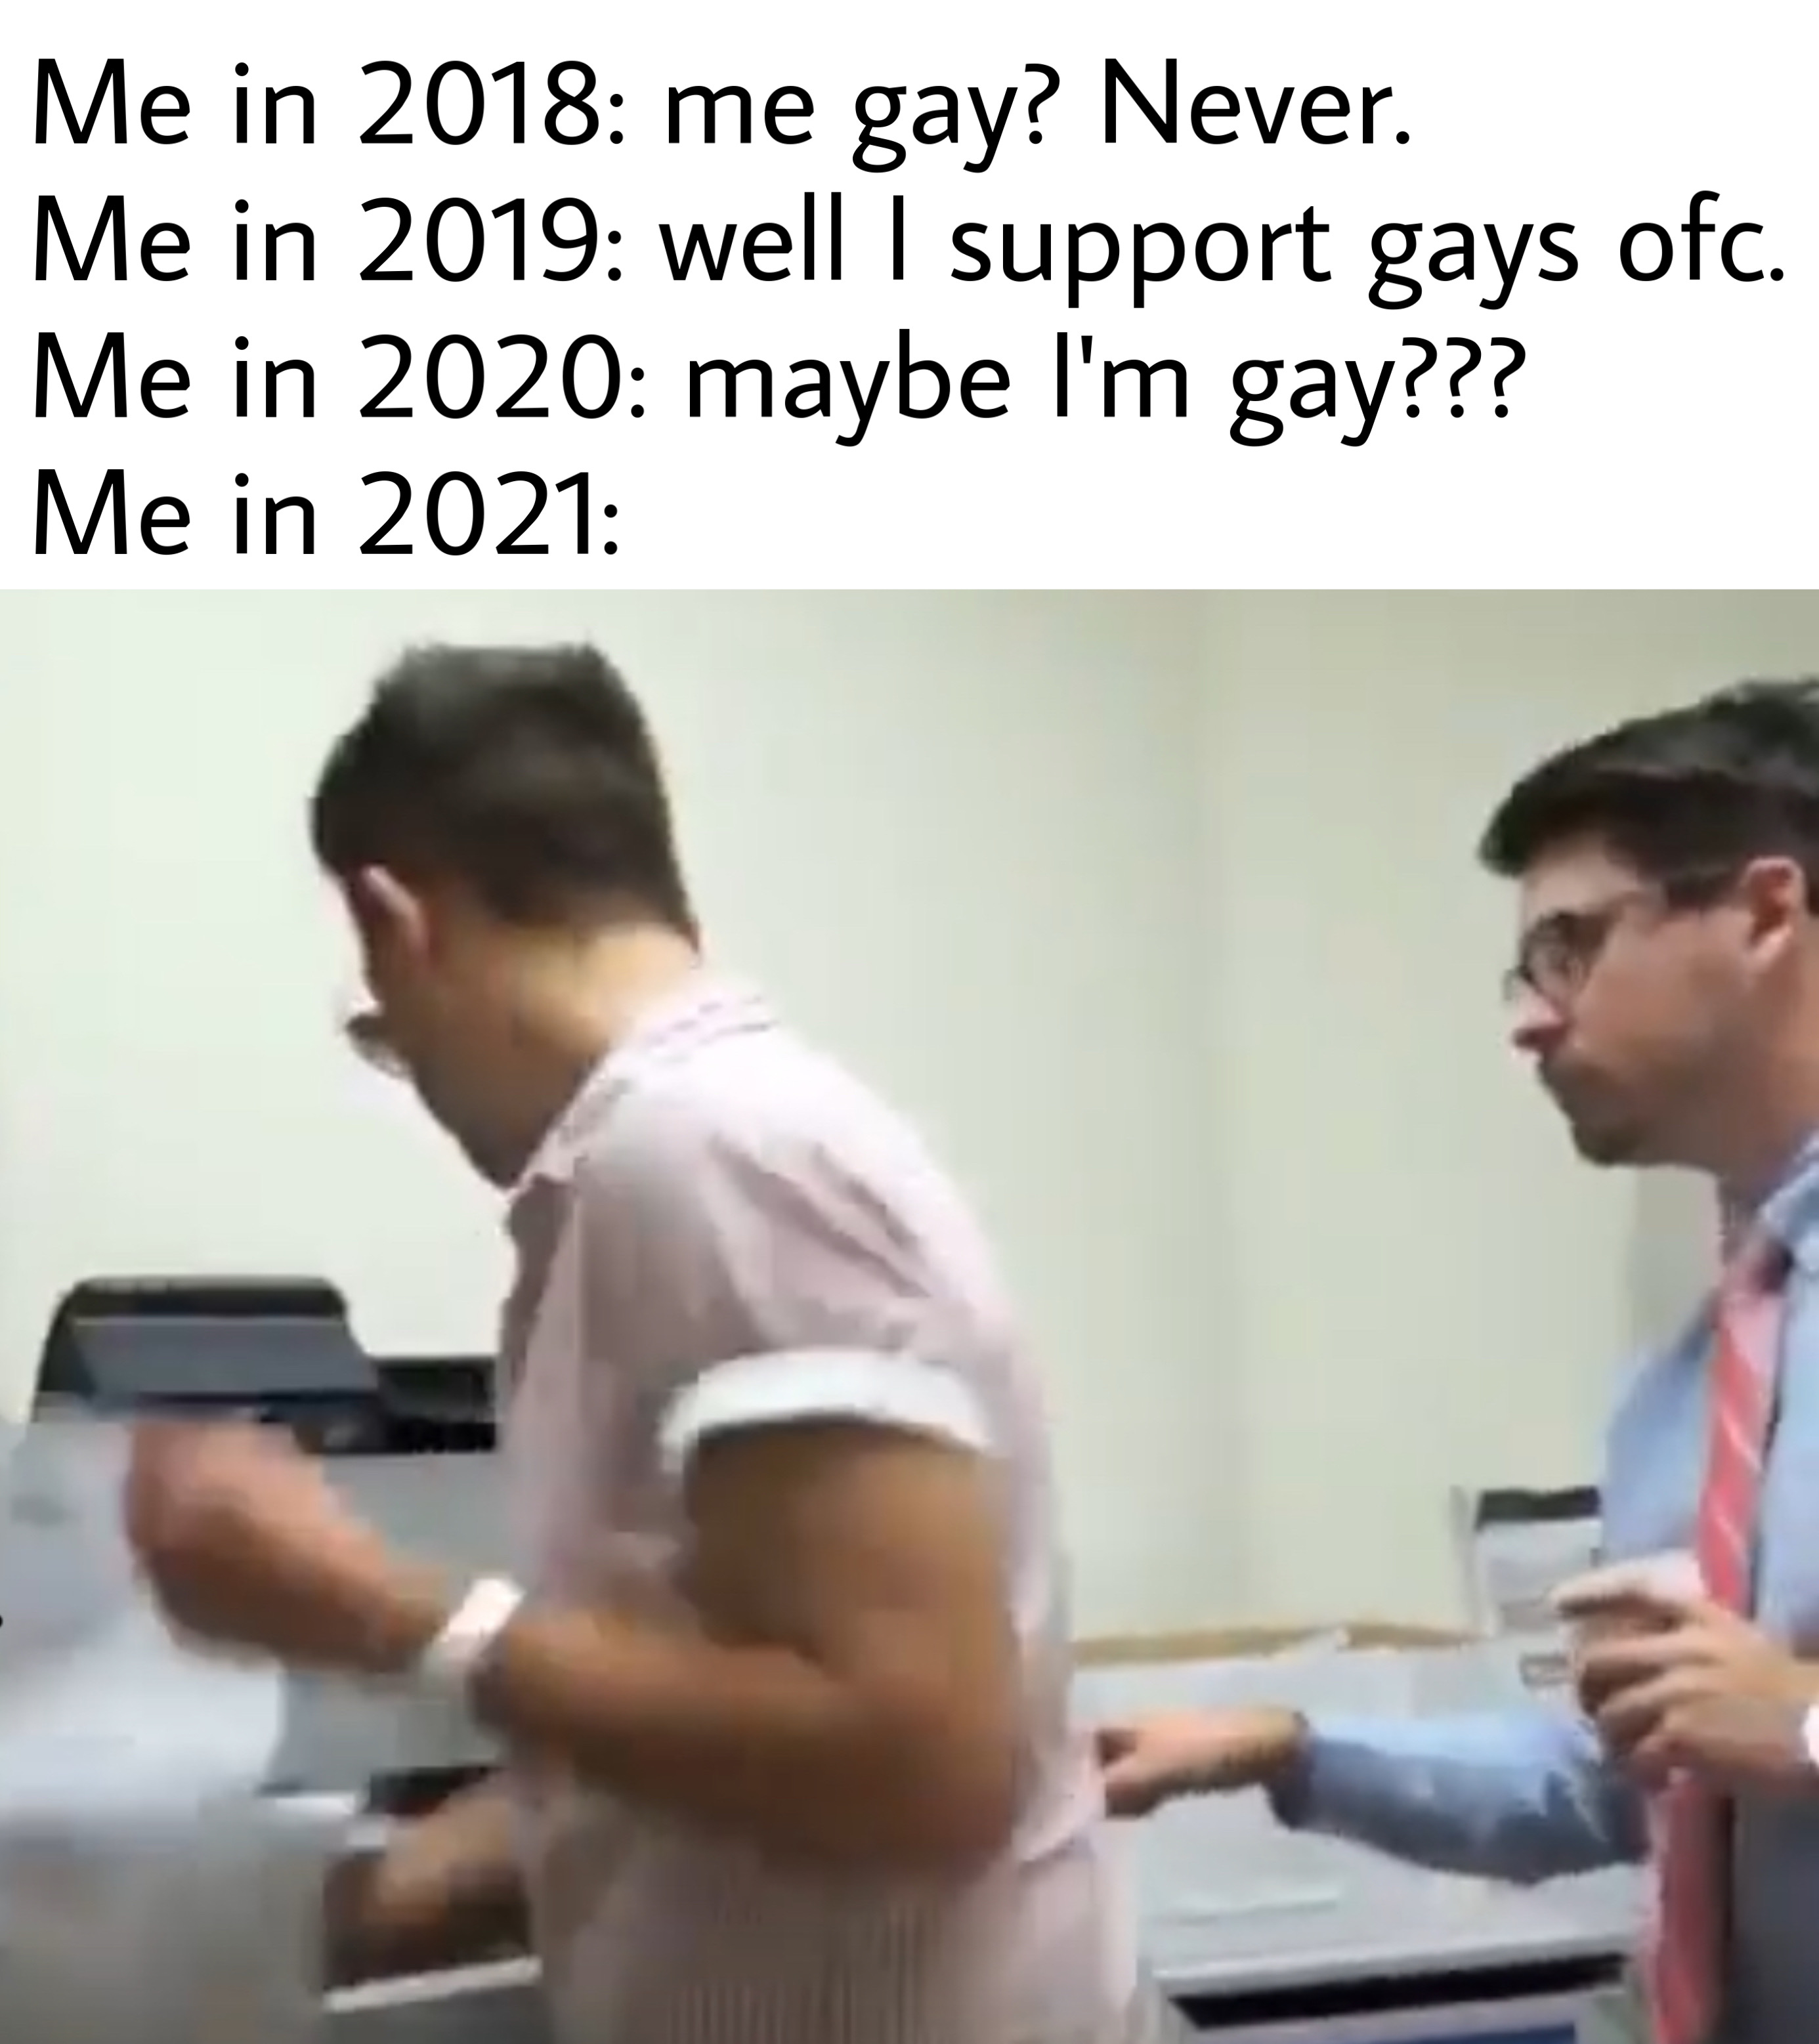 move im gay meme